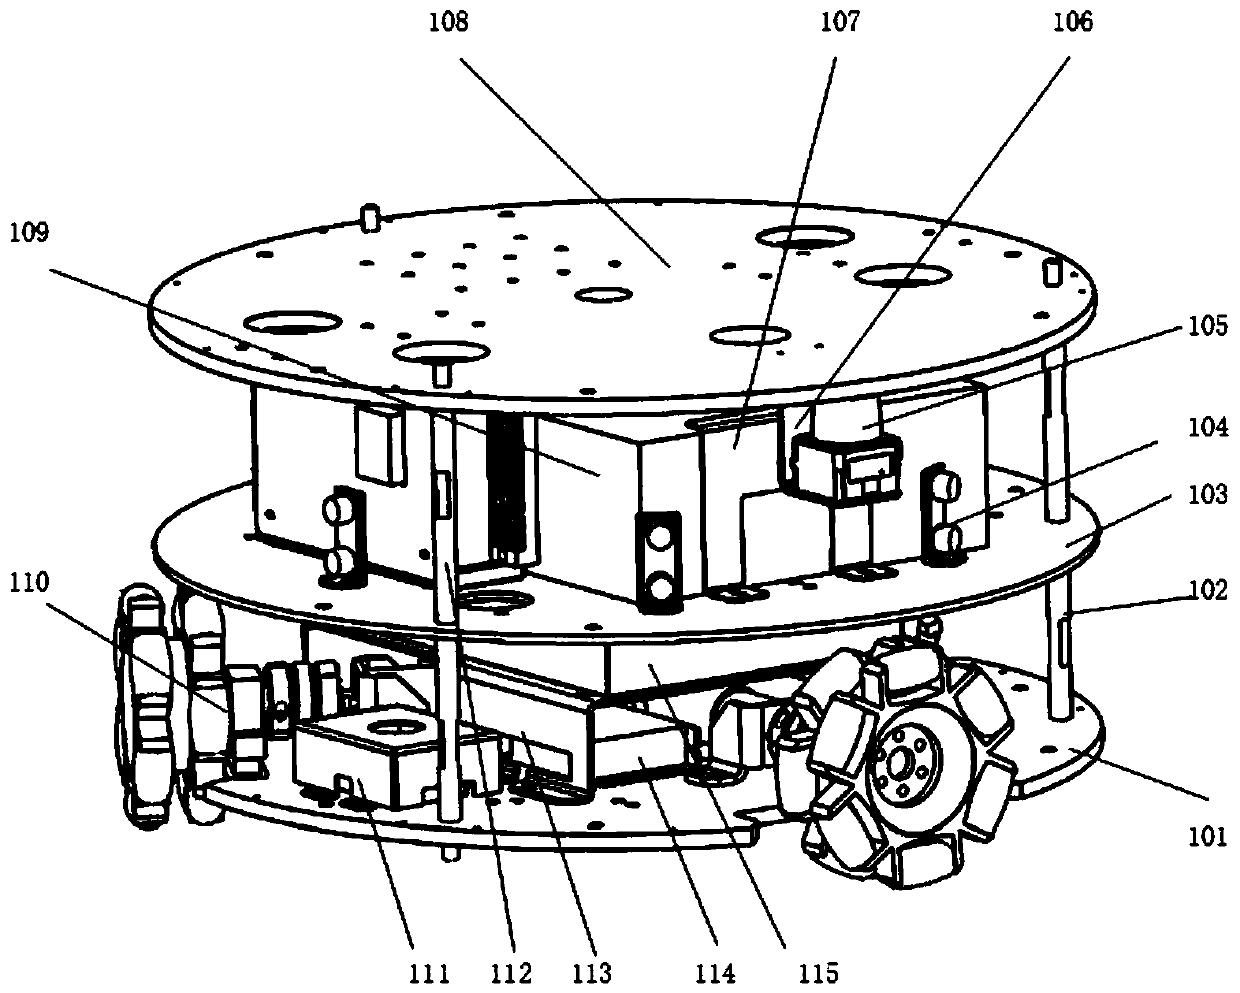 Three-wheel omnidirectional moving robot platform